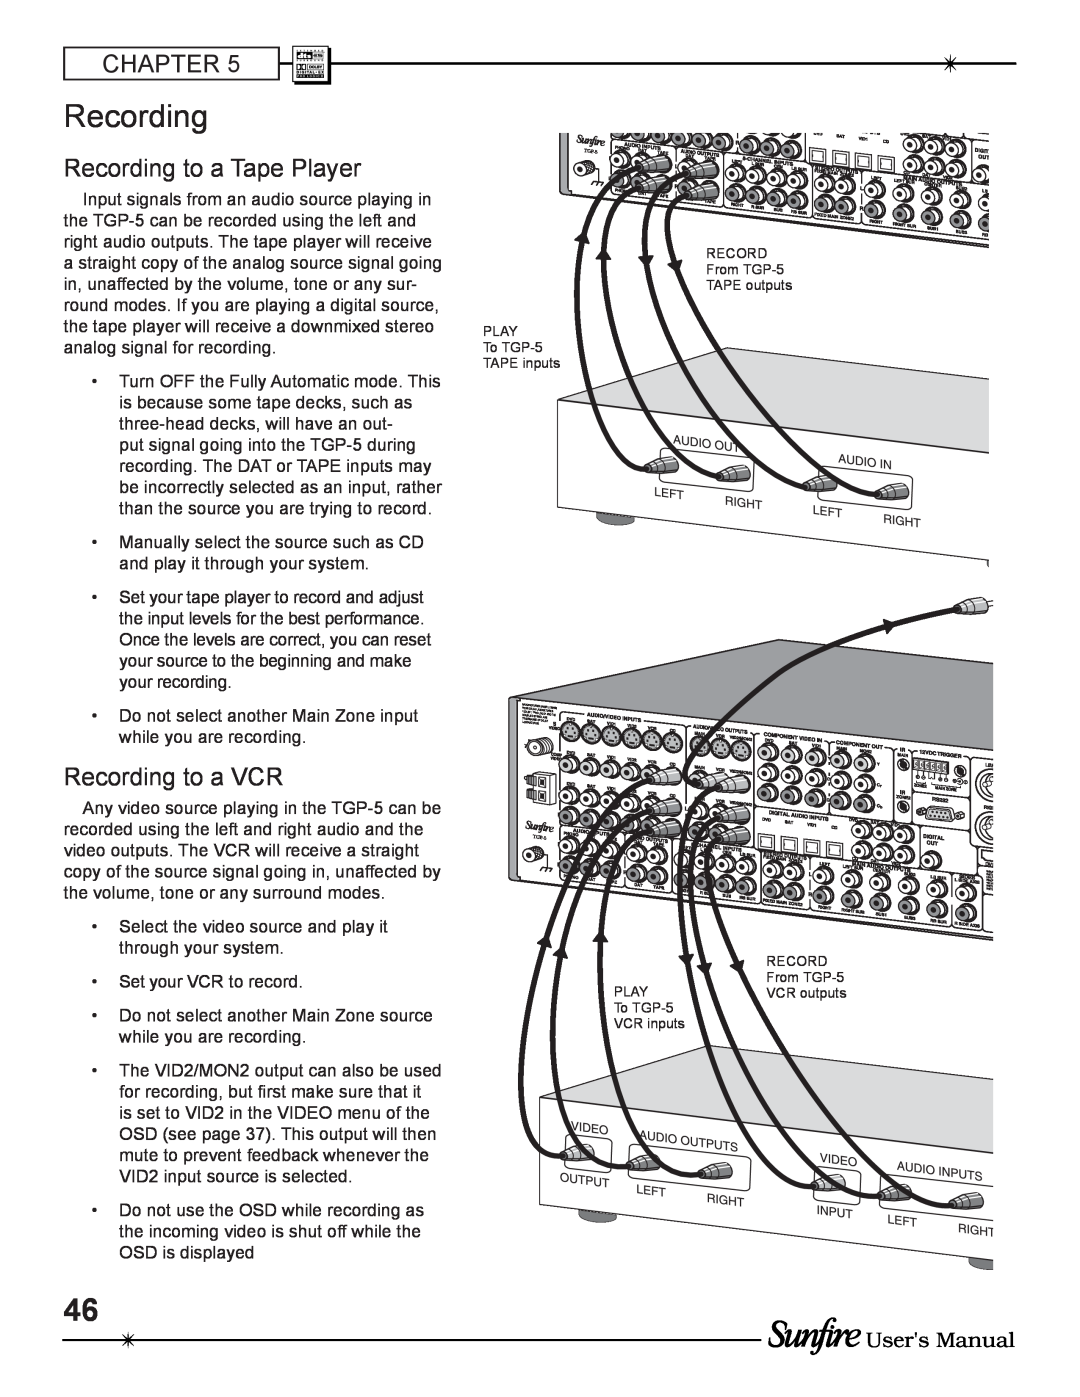 Sunfire TGP-5(E) manual Chapter, Recording to a Tape Player, Recording to a VCR, Users Manual 